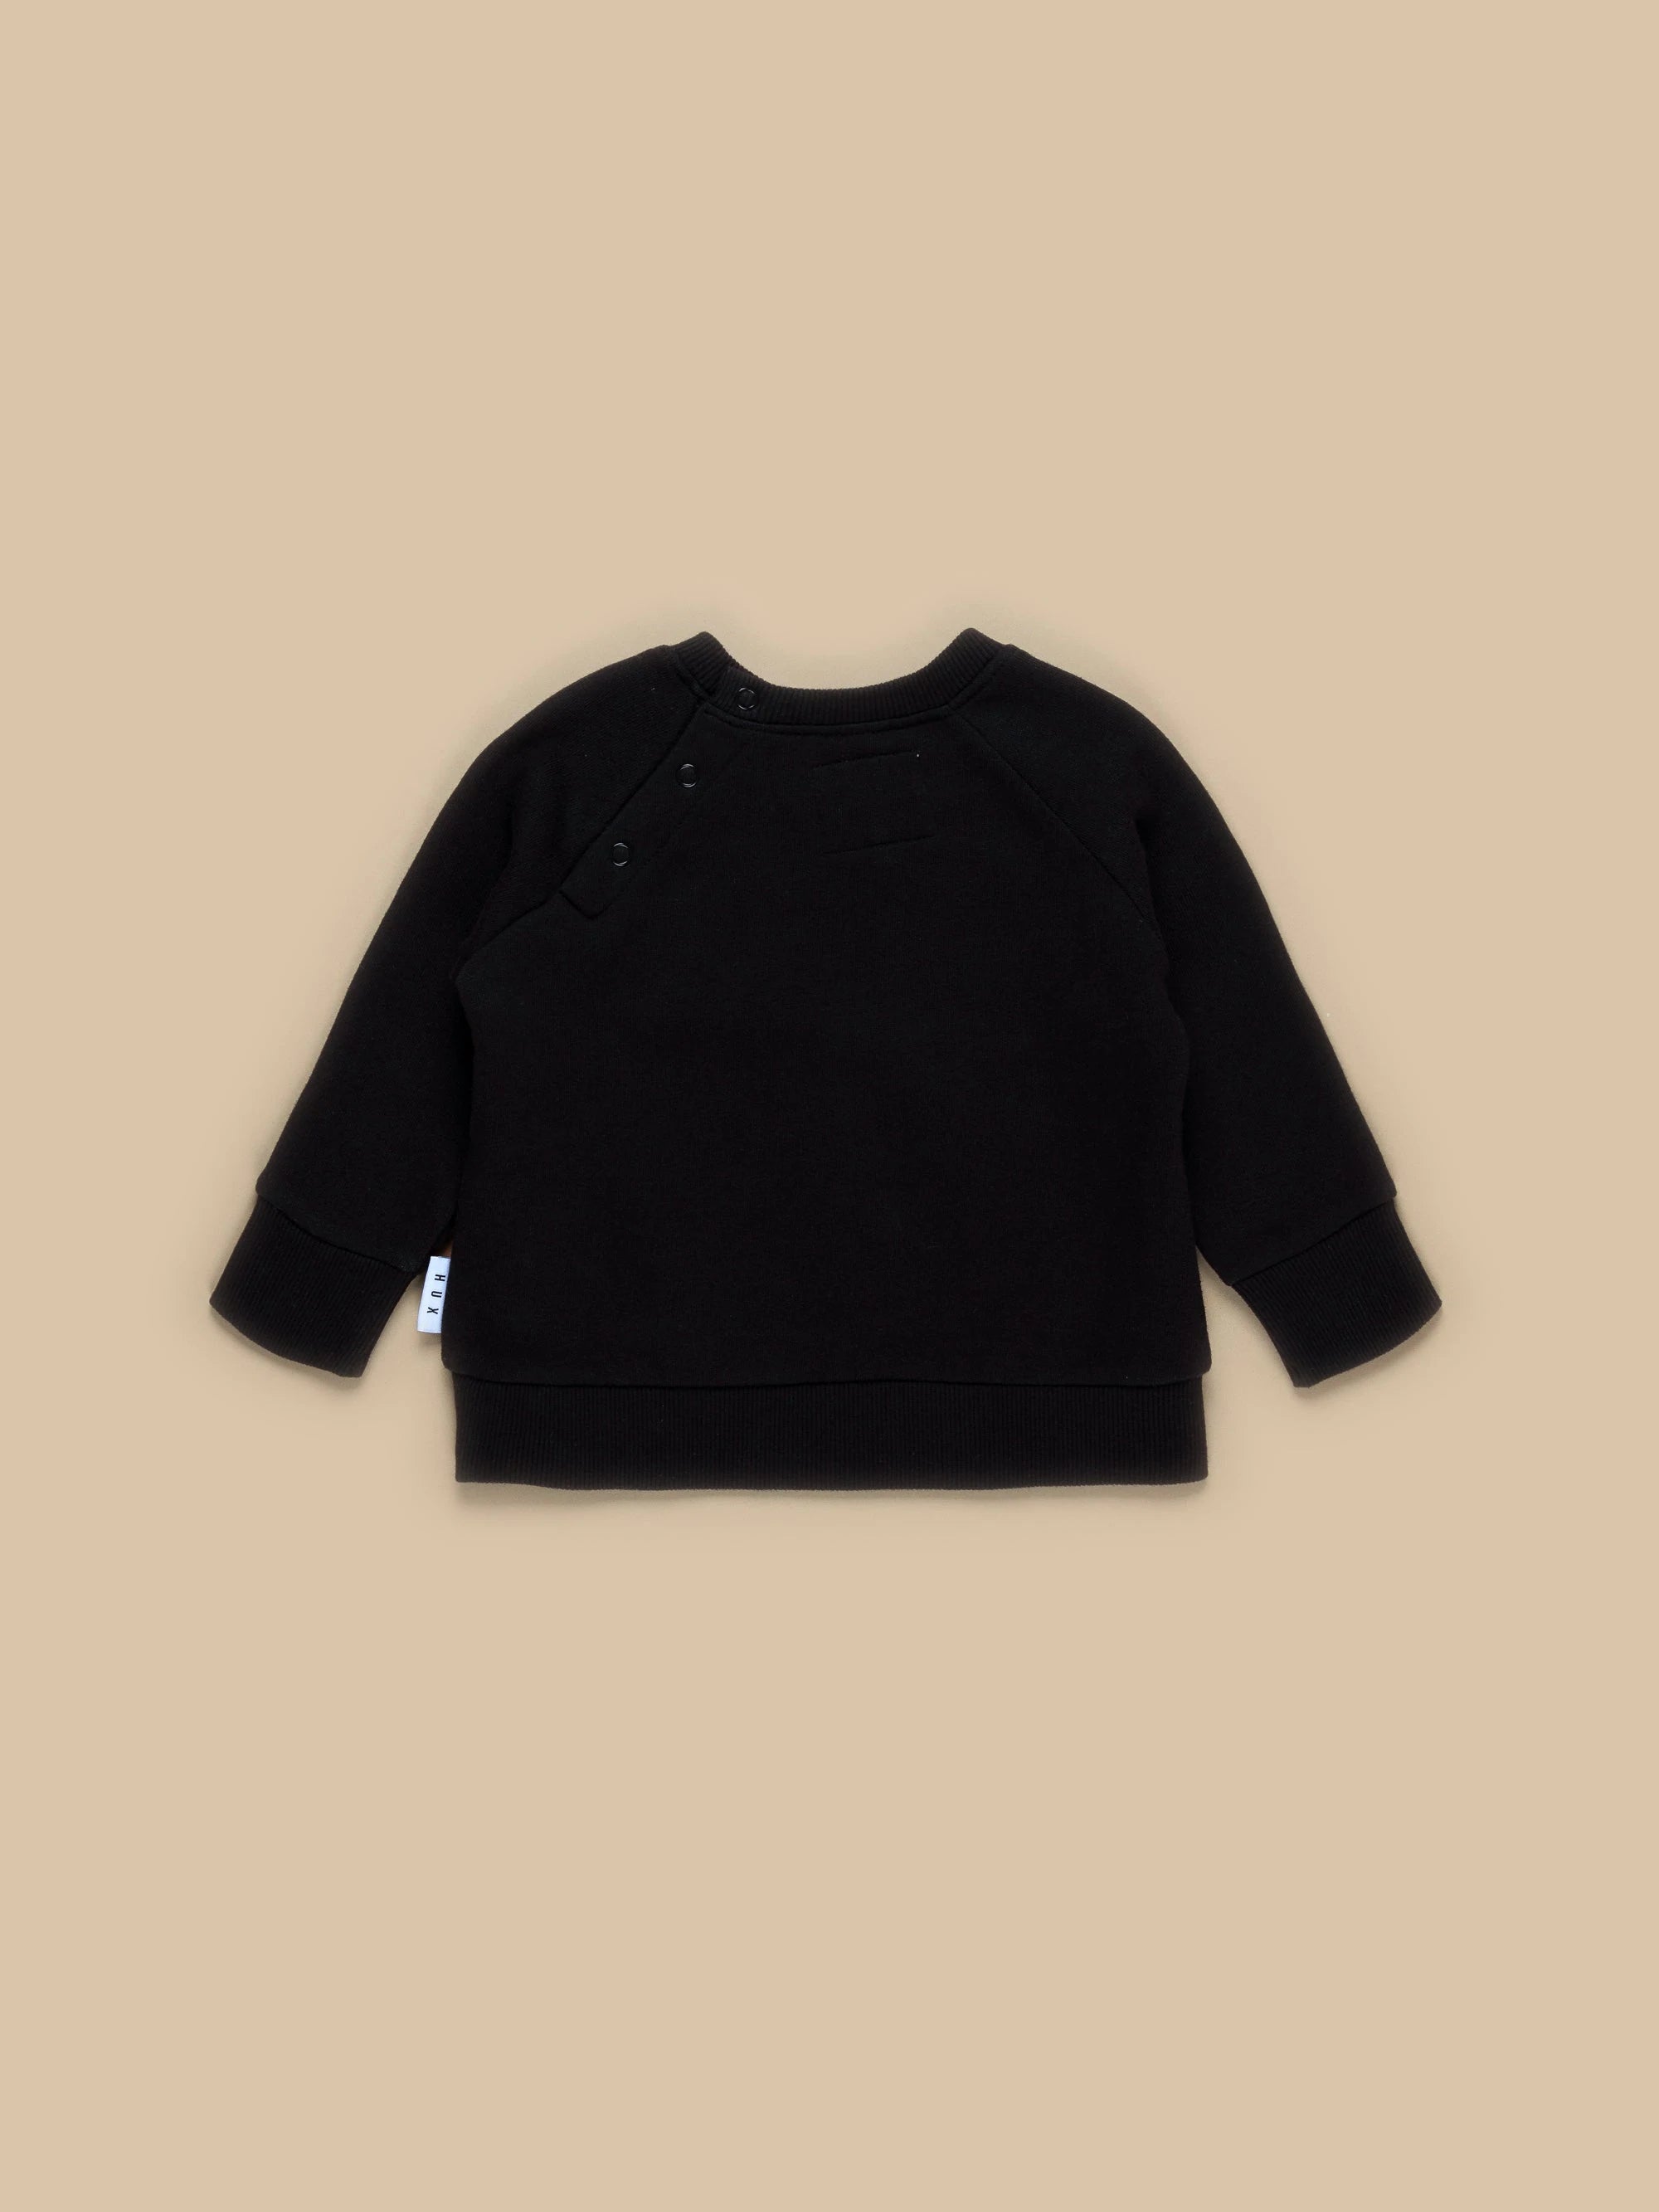 Furry Monster Sweatshirt - Black